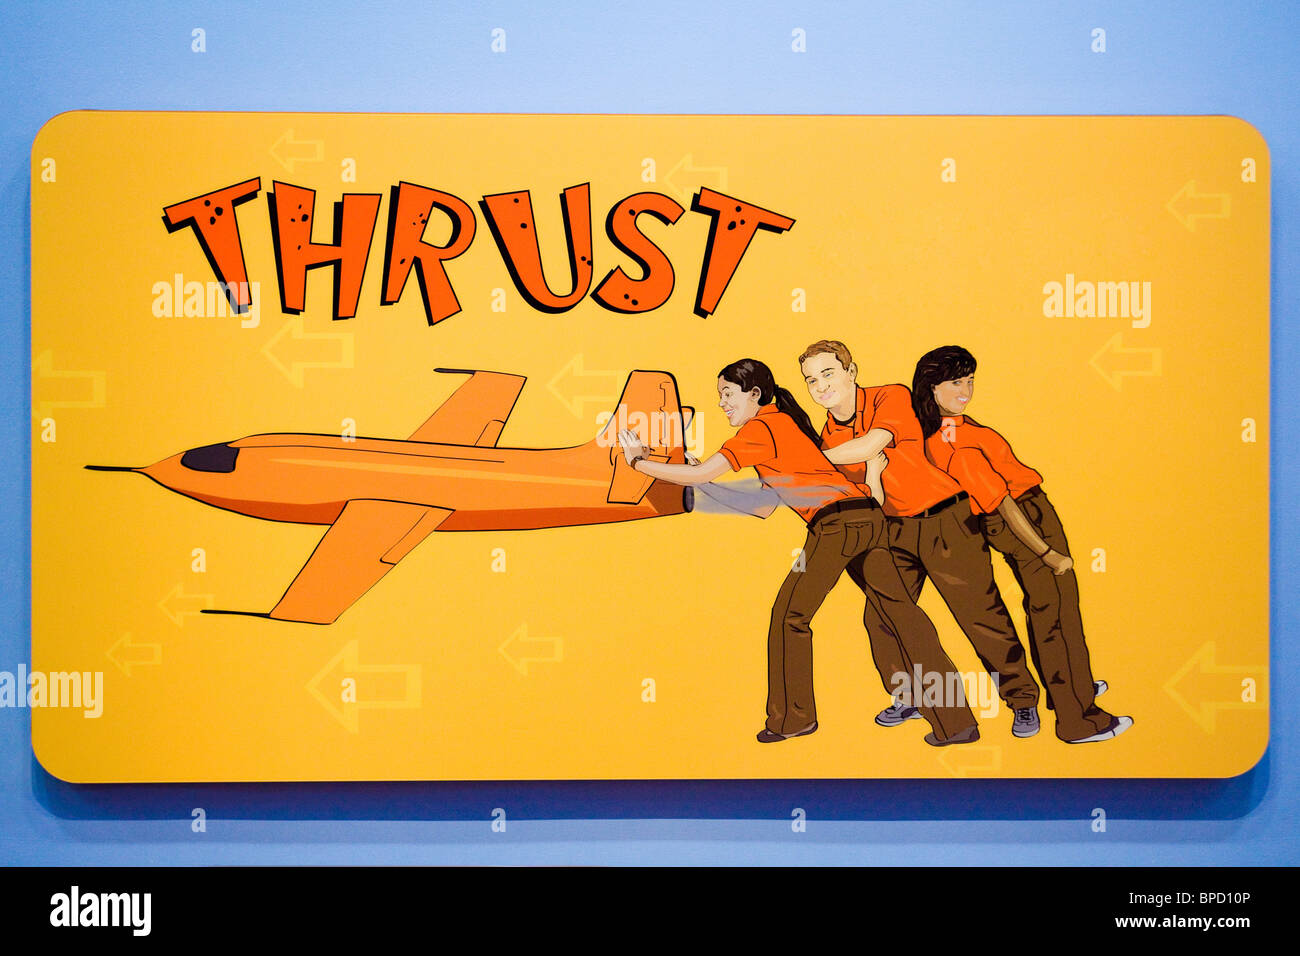 Basic physics of flight illustration - Thrust Stock Photo